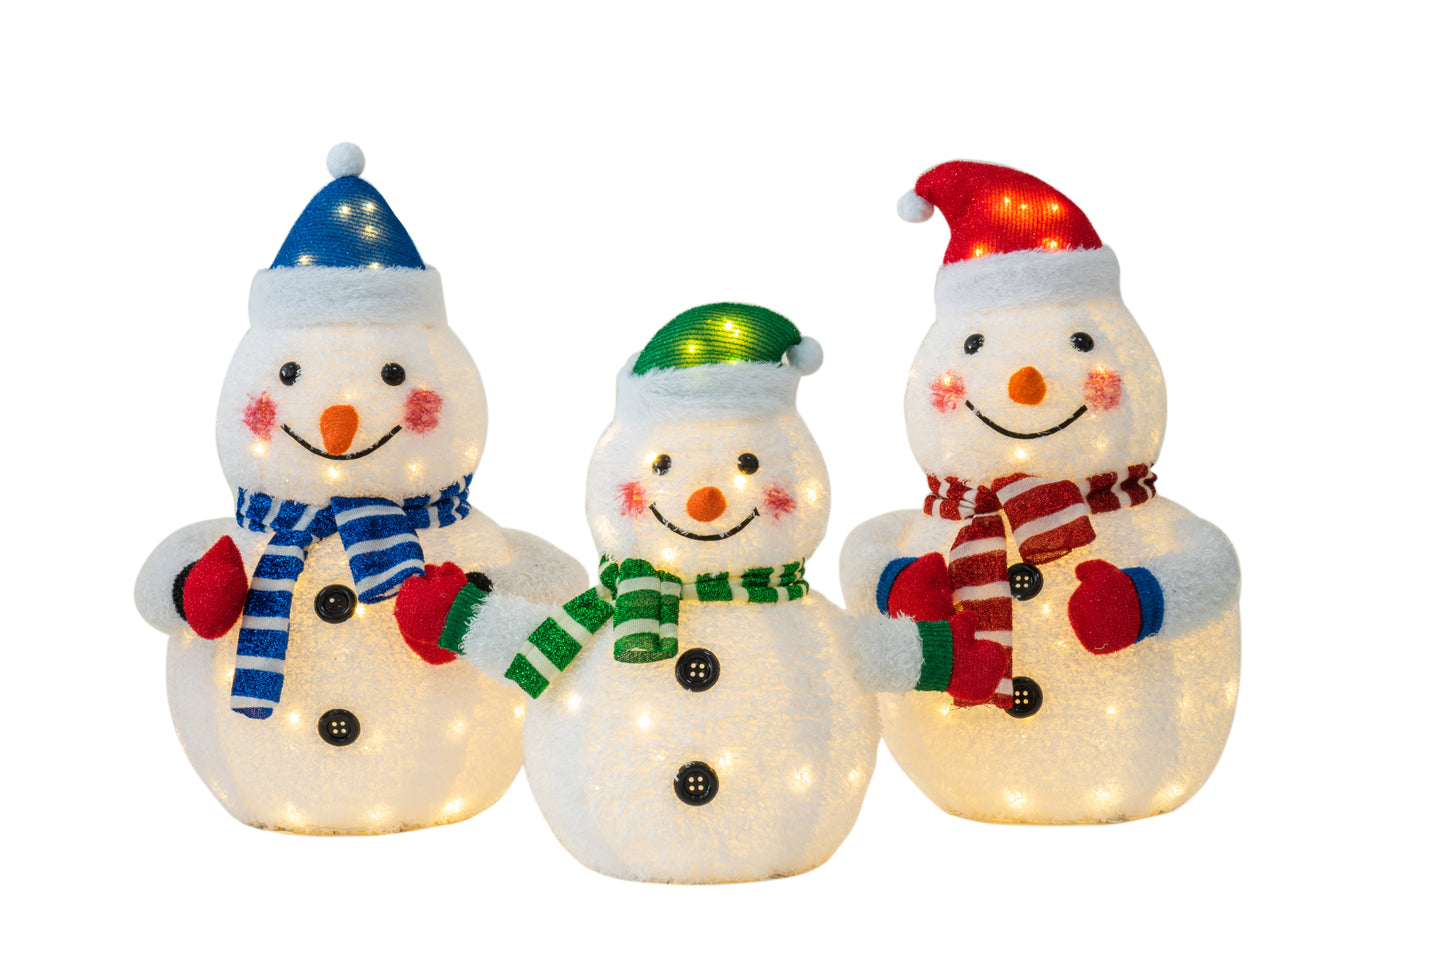 Outdoor Snowman Christmas Decorations - Christmas Celebration